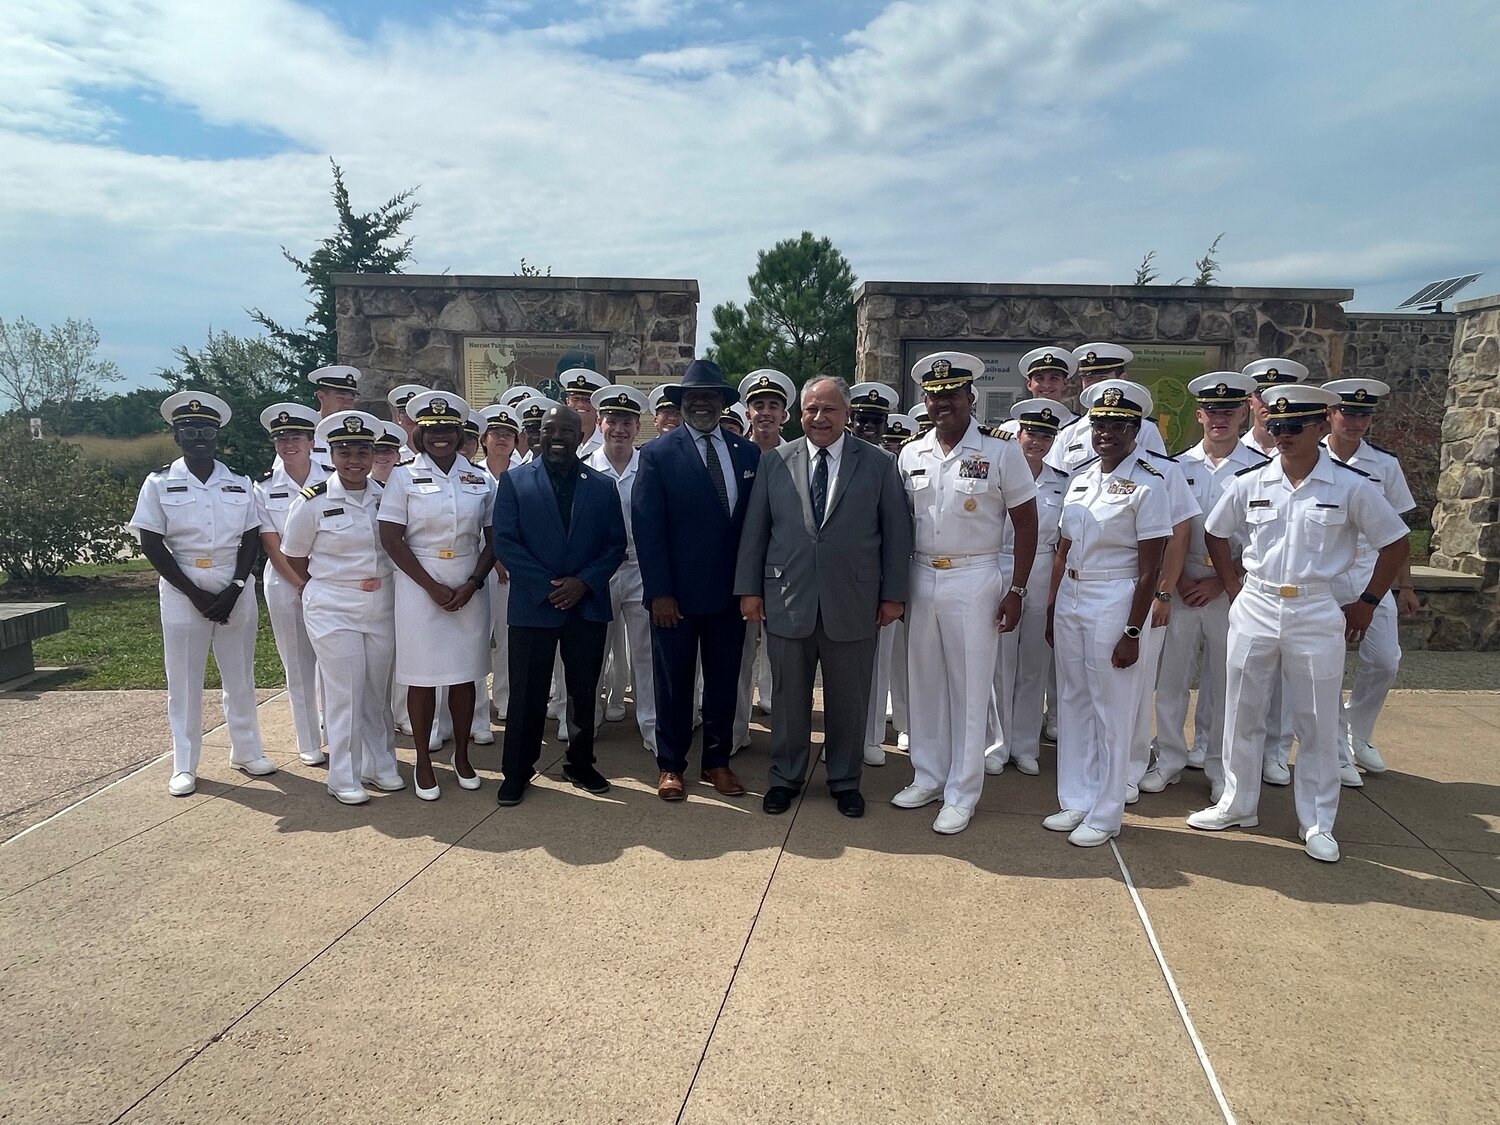 SECNAV NNOA President Midshipmen -The SECNAV with the President of the NNOA and Midshipmen from the US Naval Academy